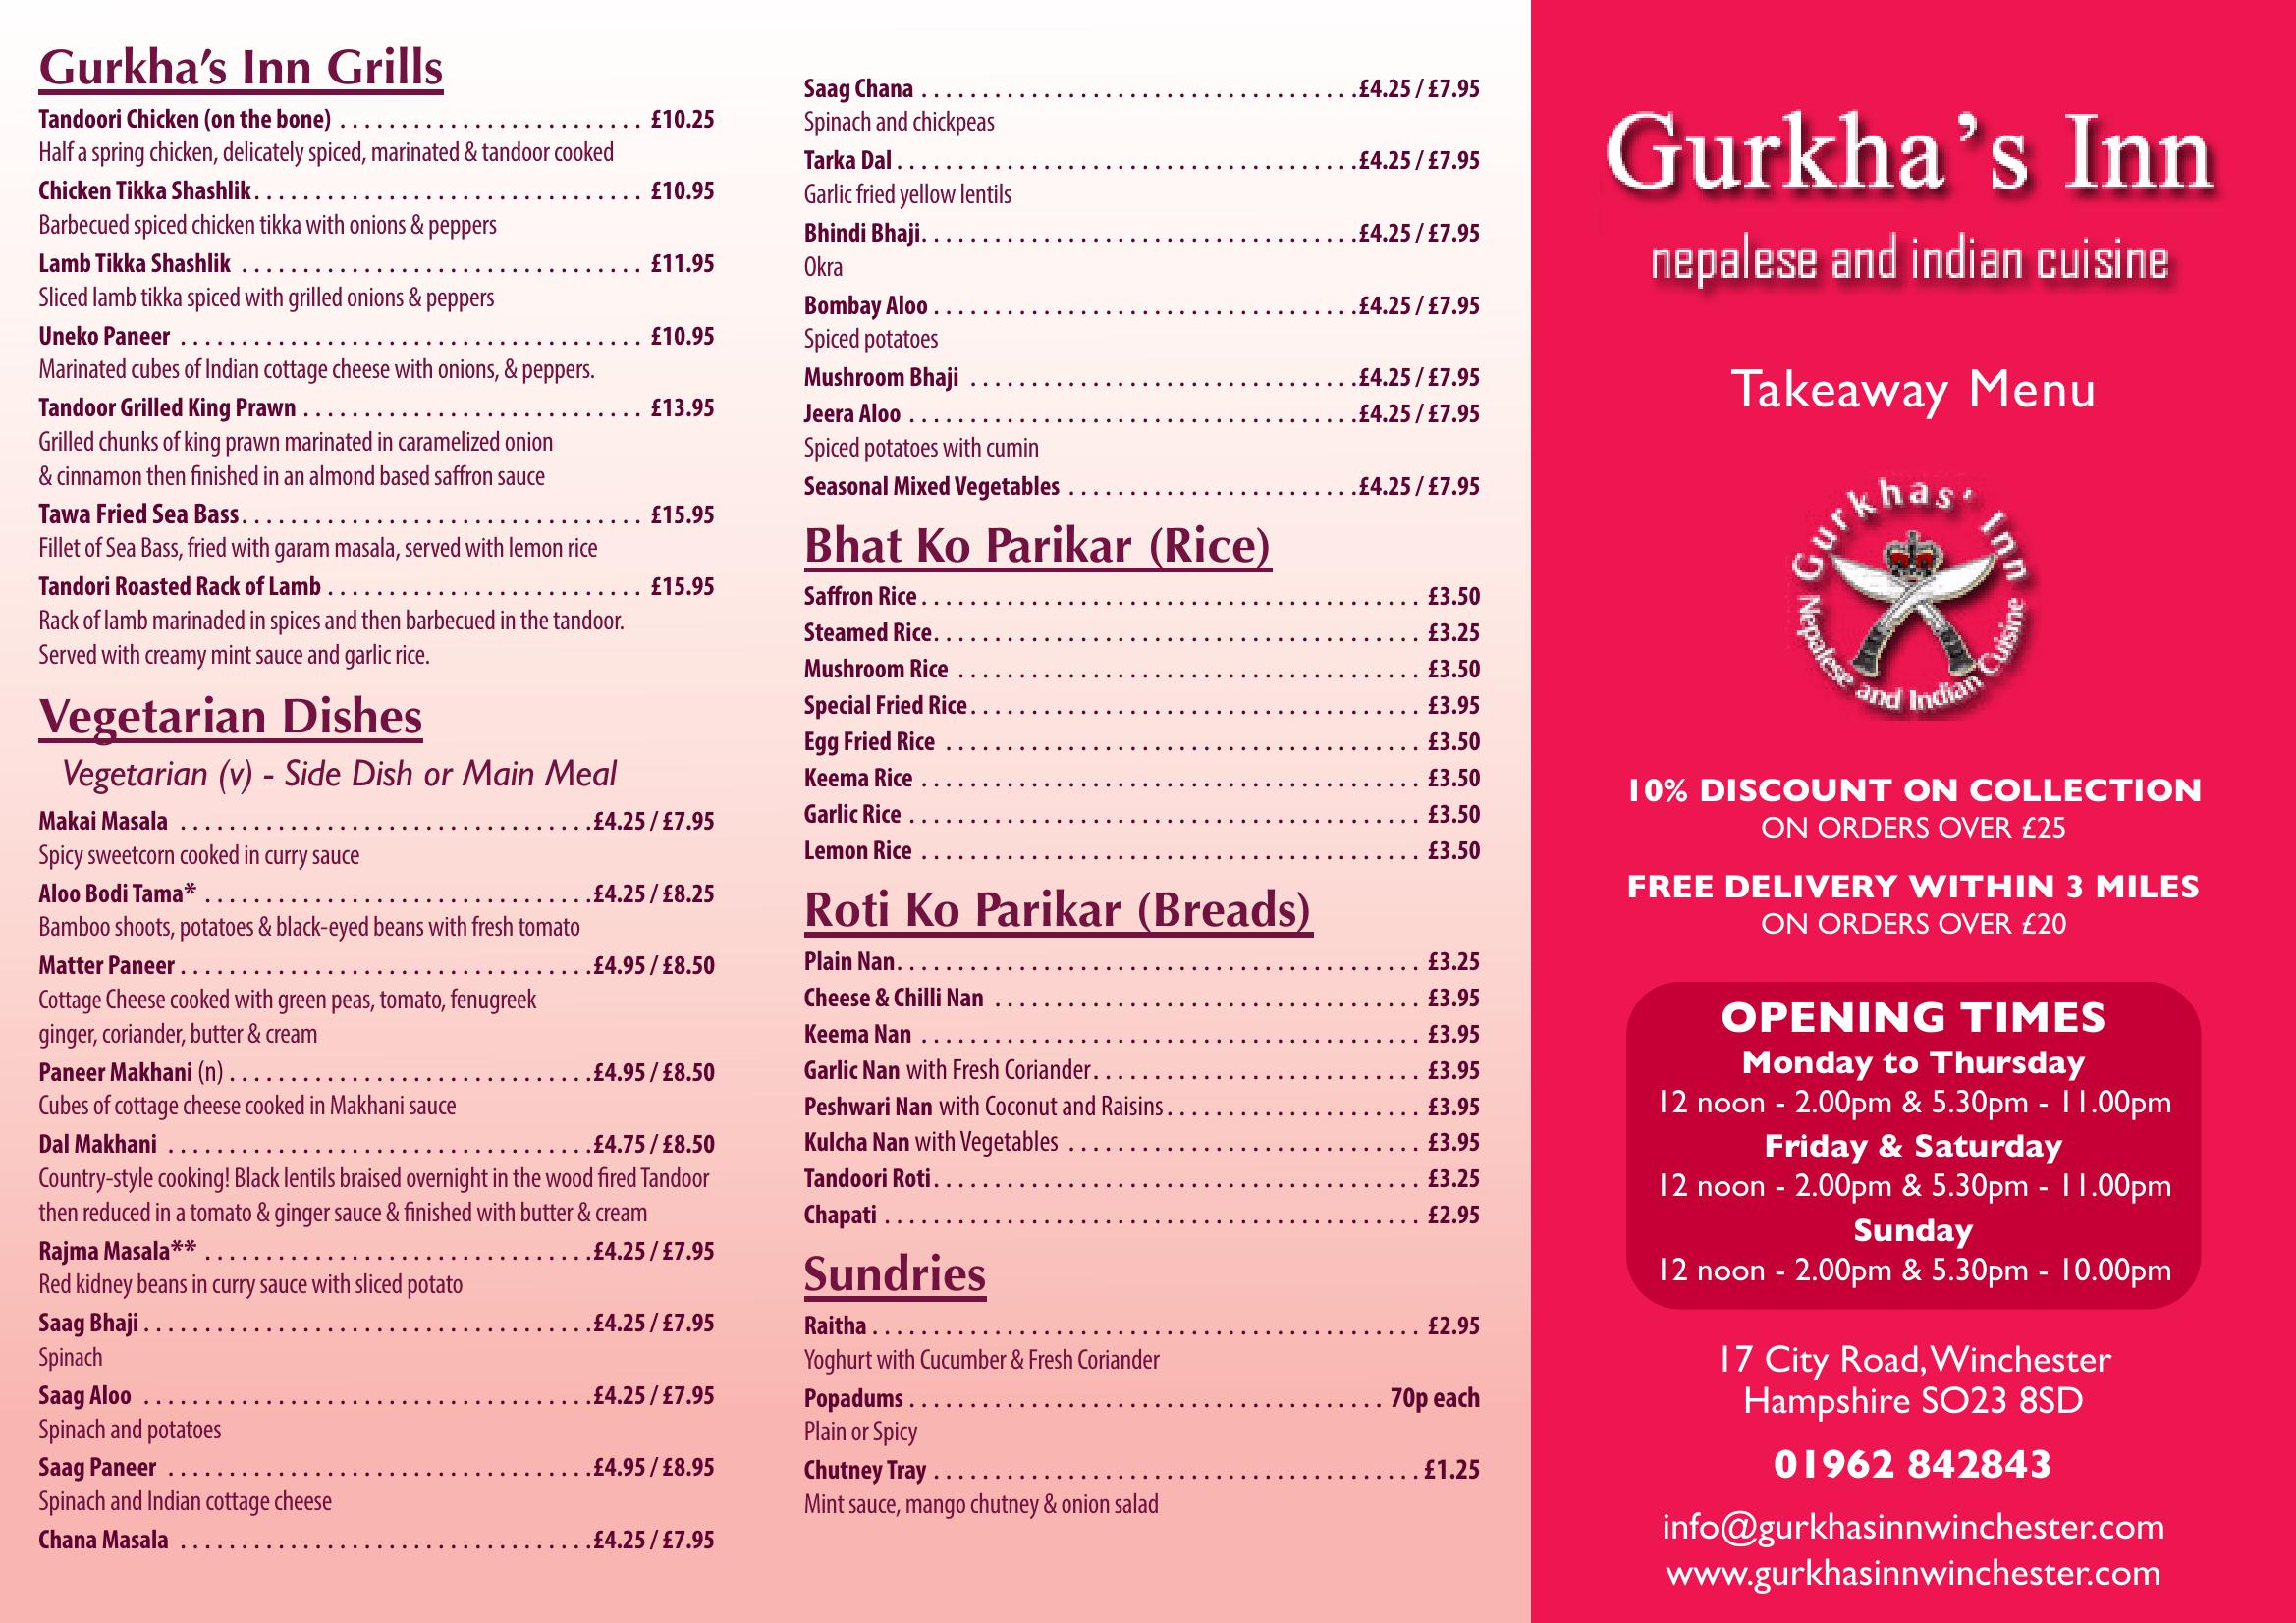 Gurkha’s inn Nepalese & indian cuisine - main menu